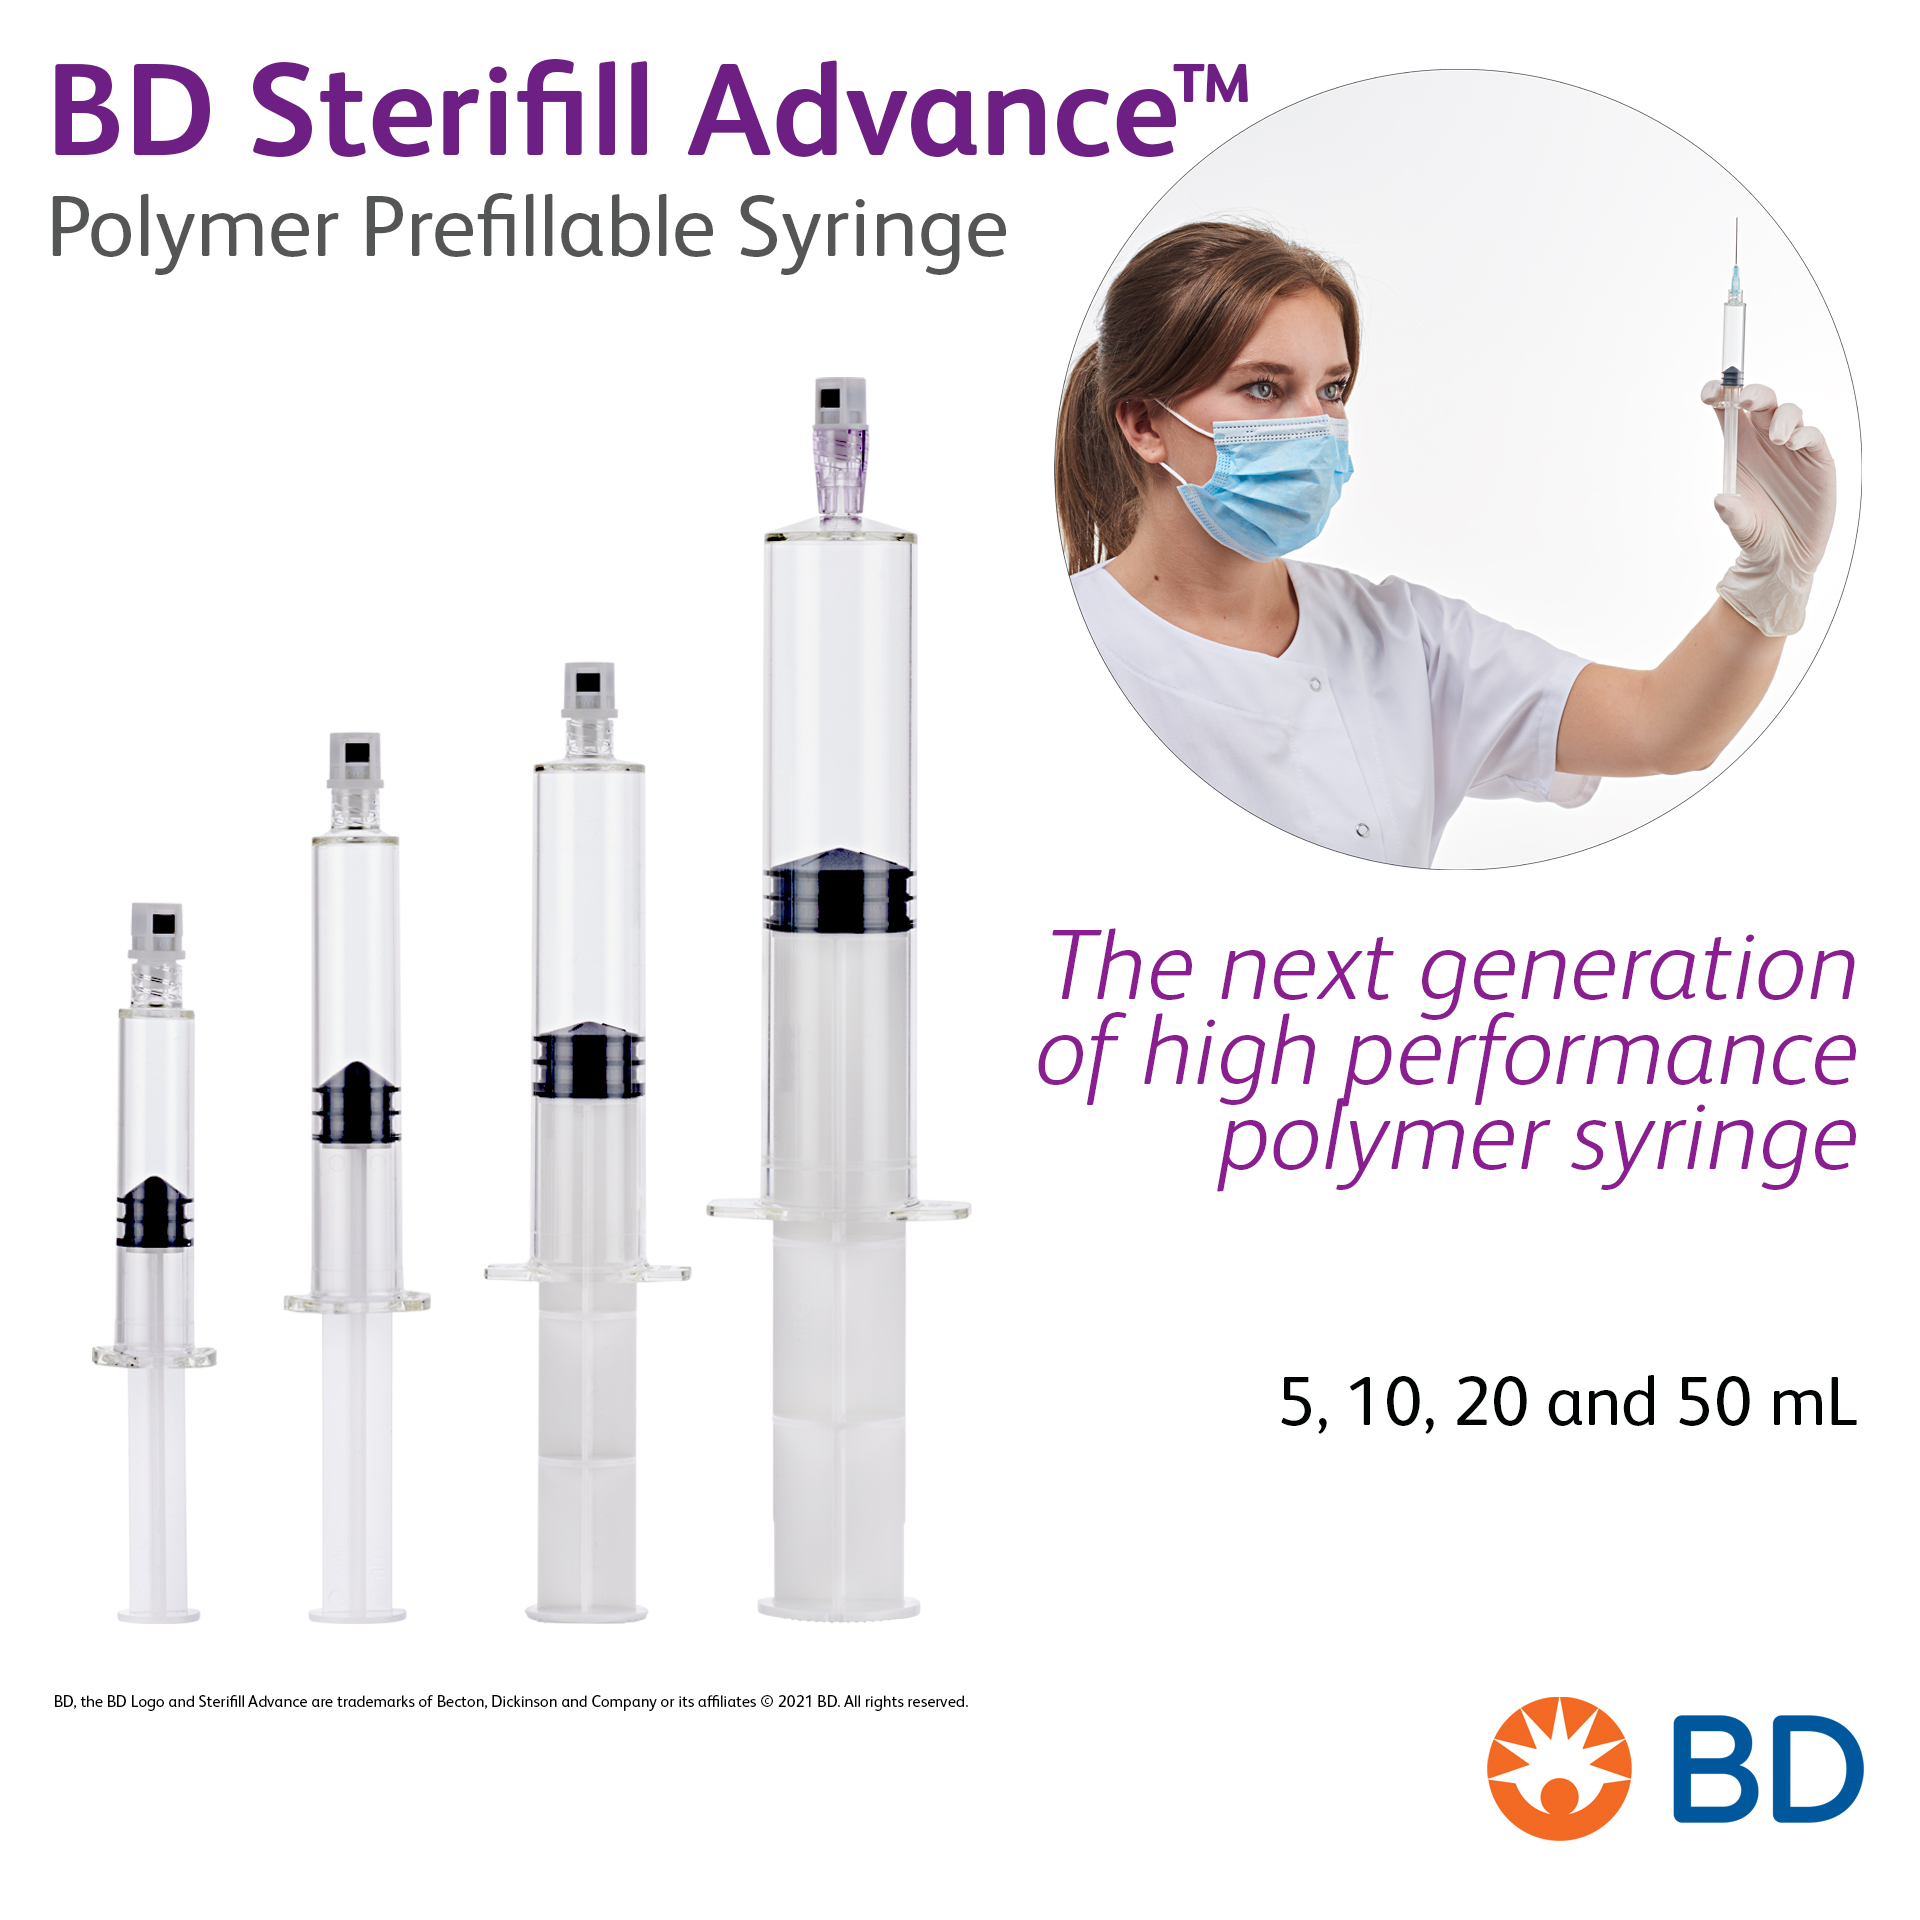 BD Sterifill Advance™ Polymer Prefillable Syringe - The next generation of high performance polymer syringe